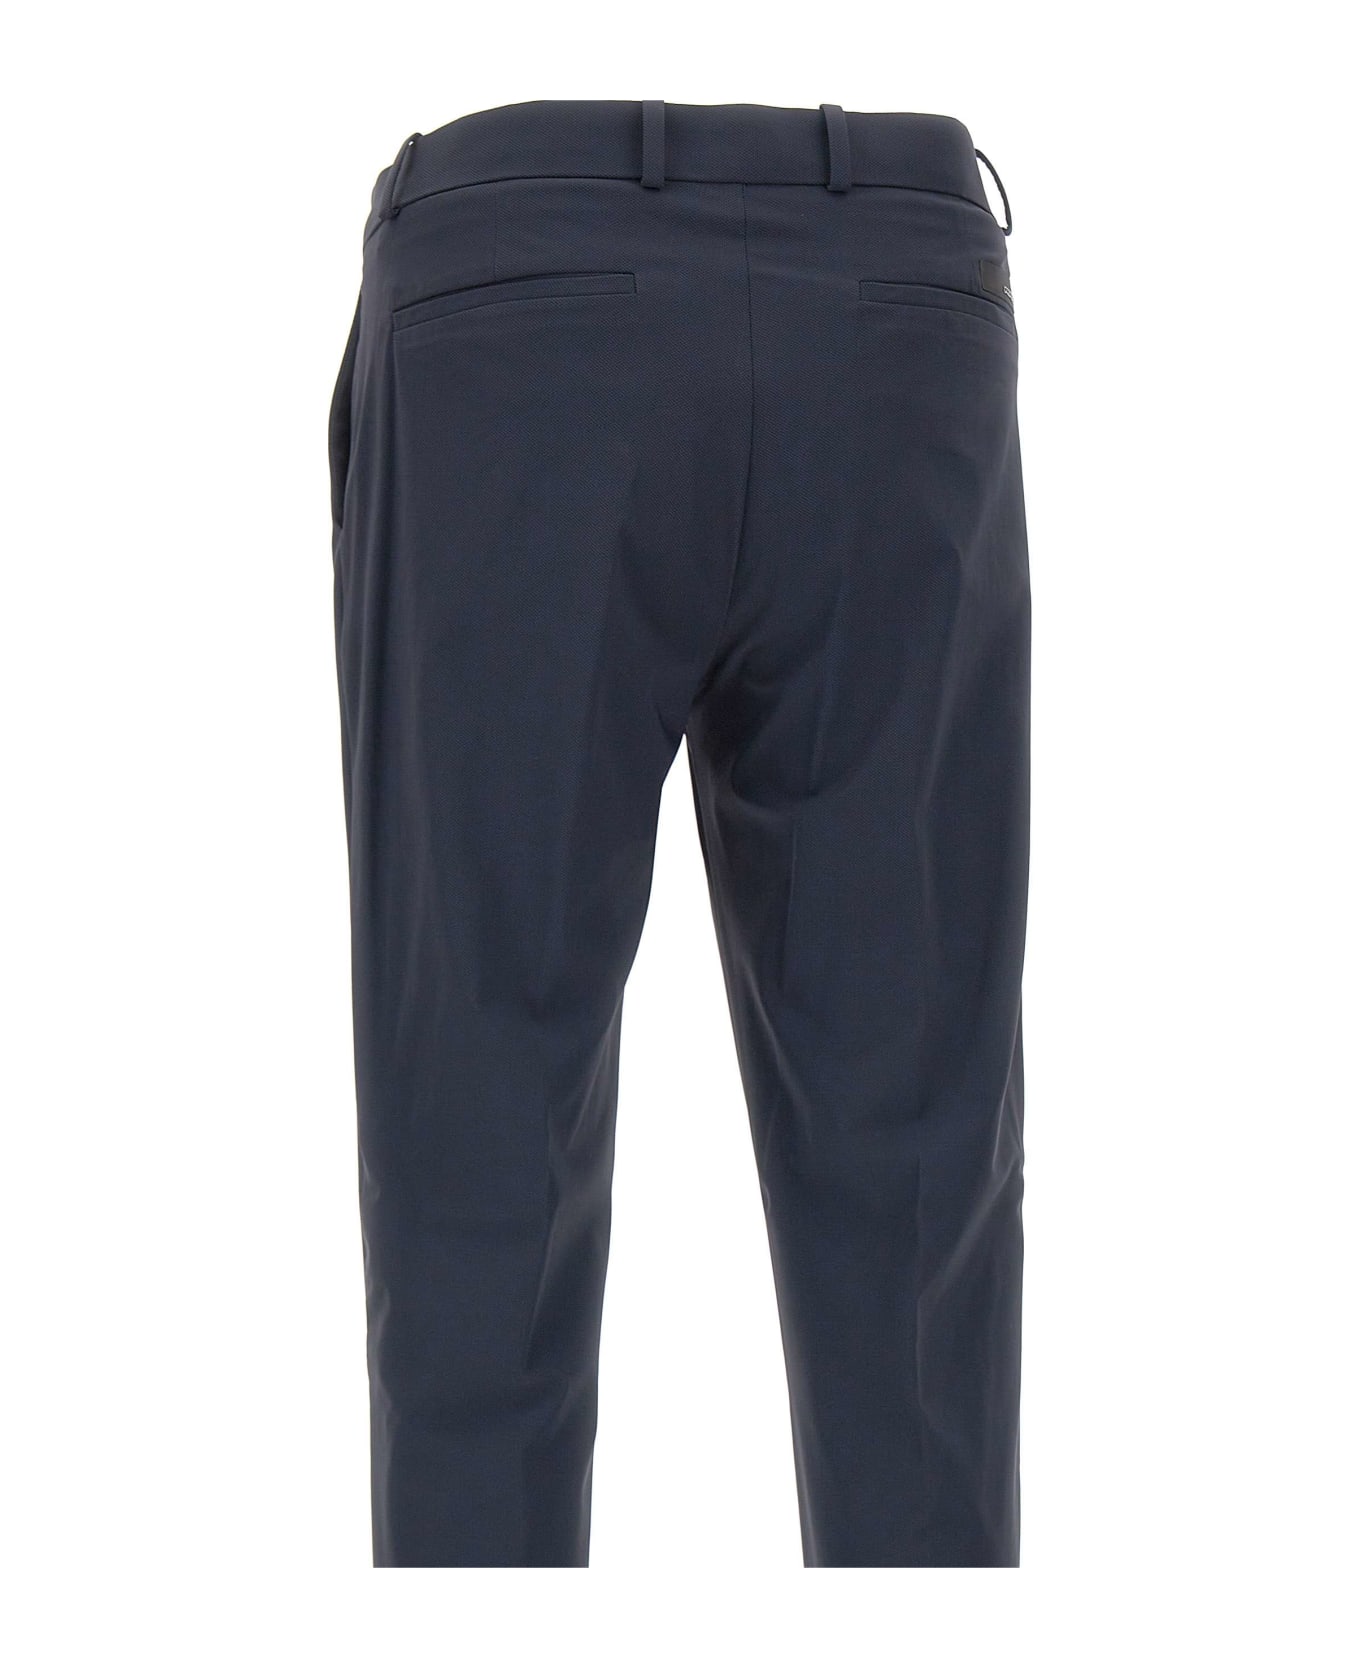 RRD - Roberto Ricci Design "micro Chino Pant" Men's Trousers - BLUE